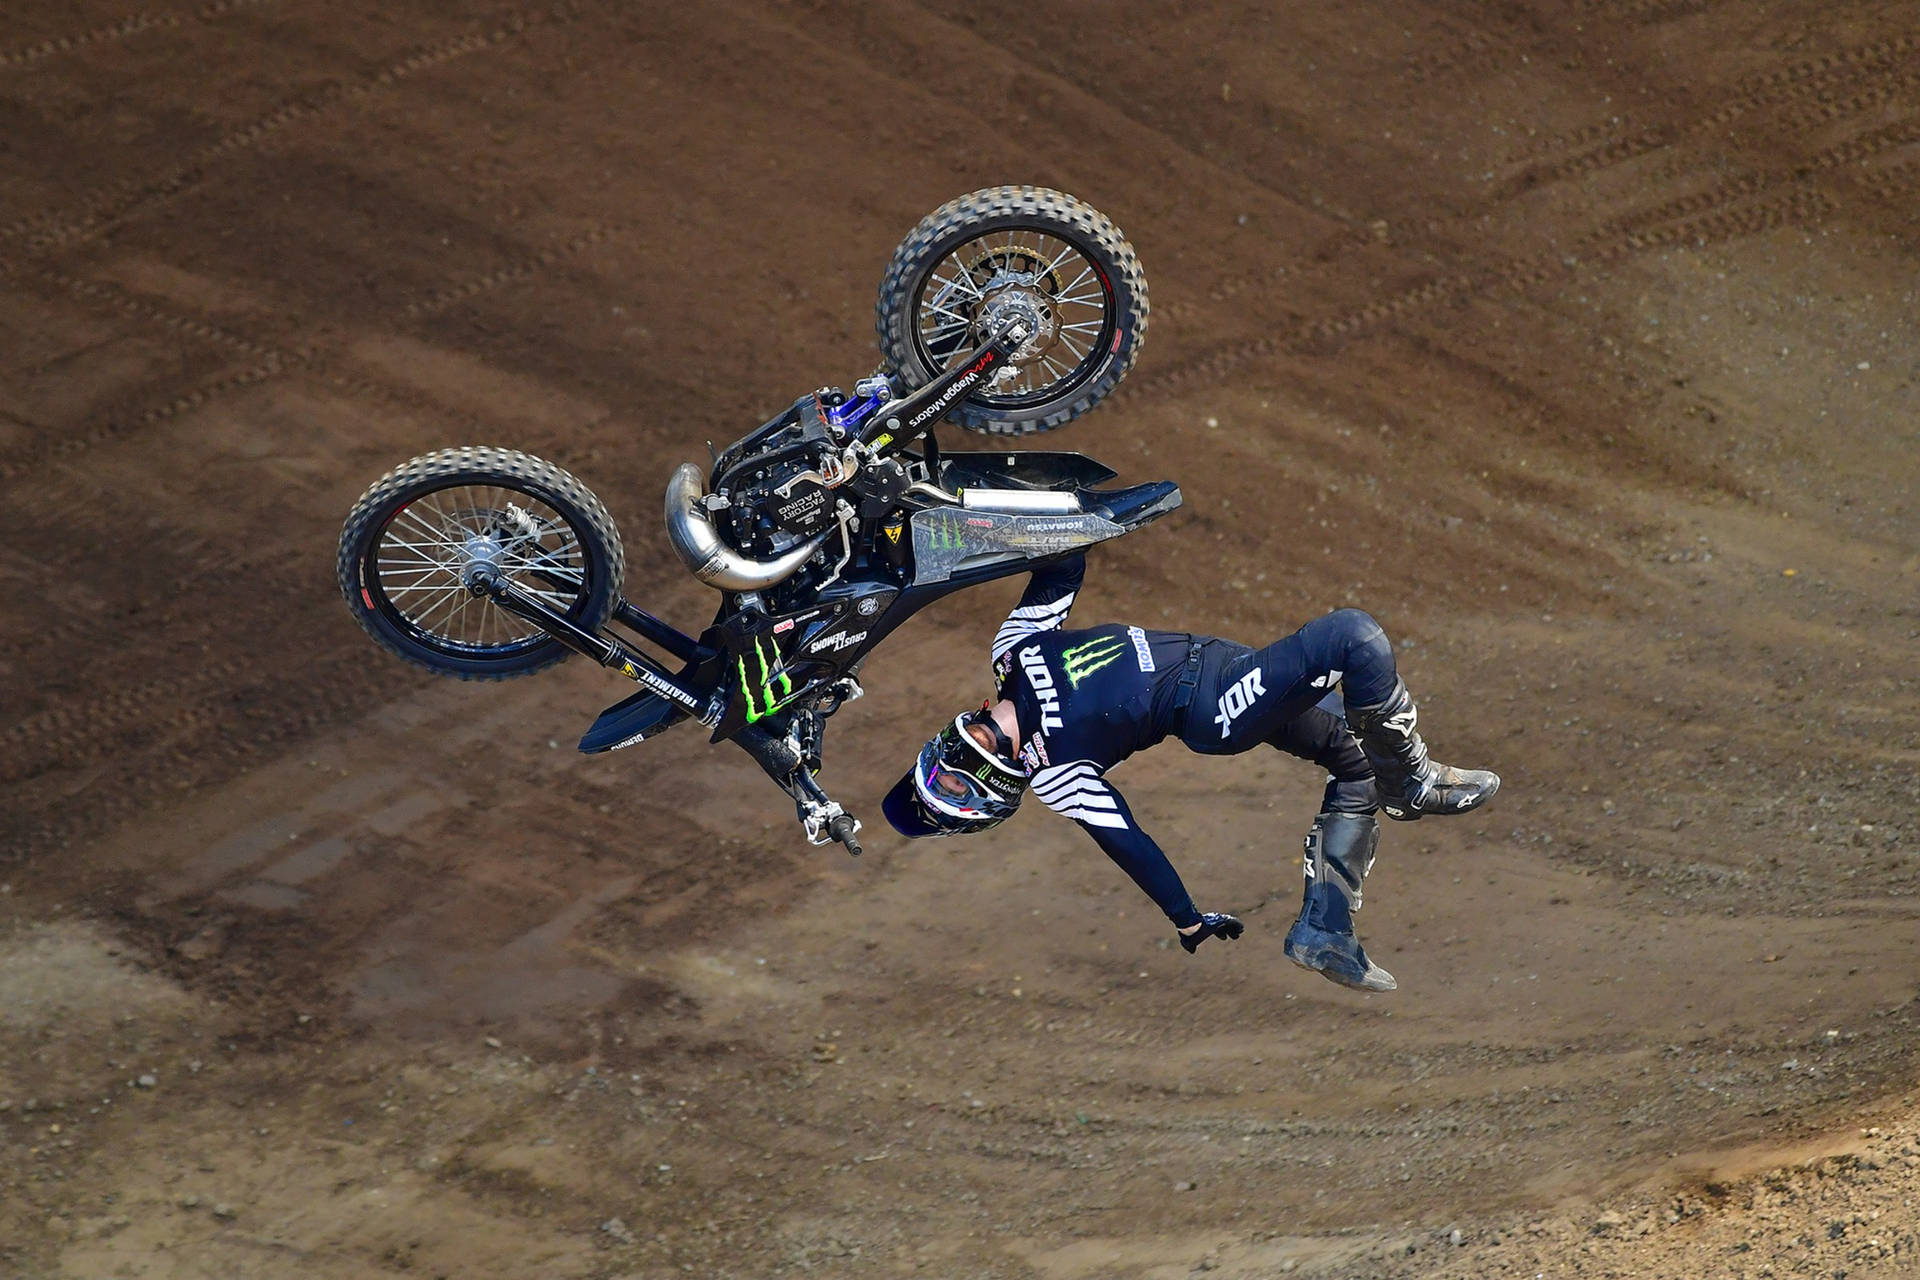 Caption: Thrill Of Backflip At X Games Motocross Event